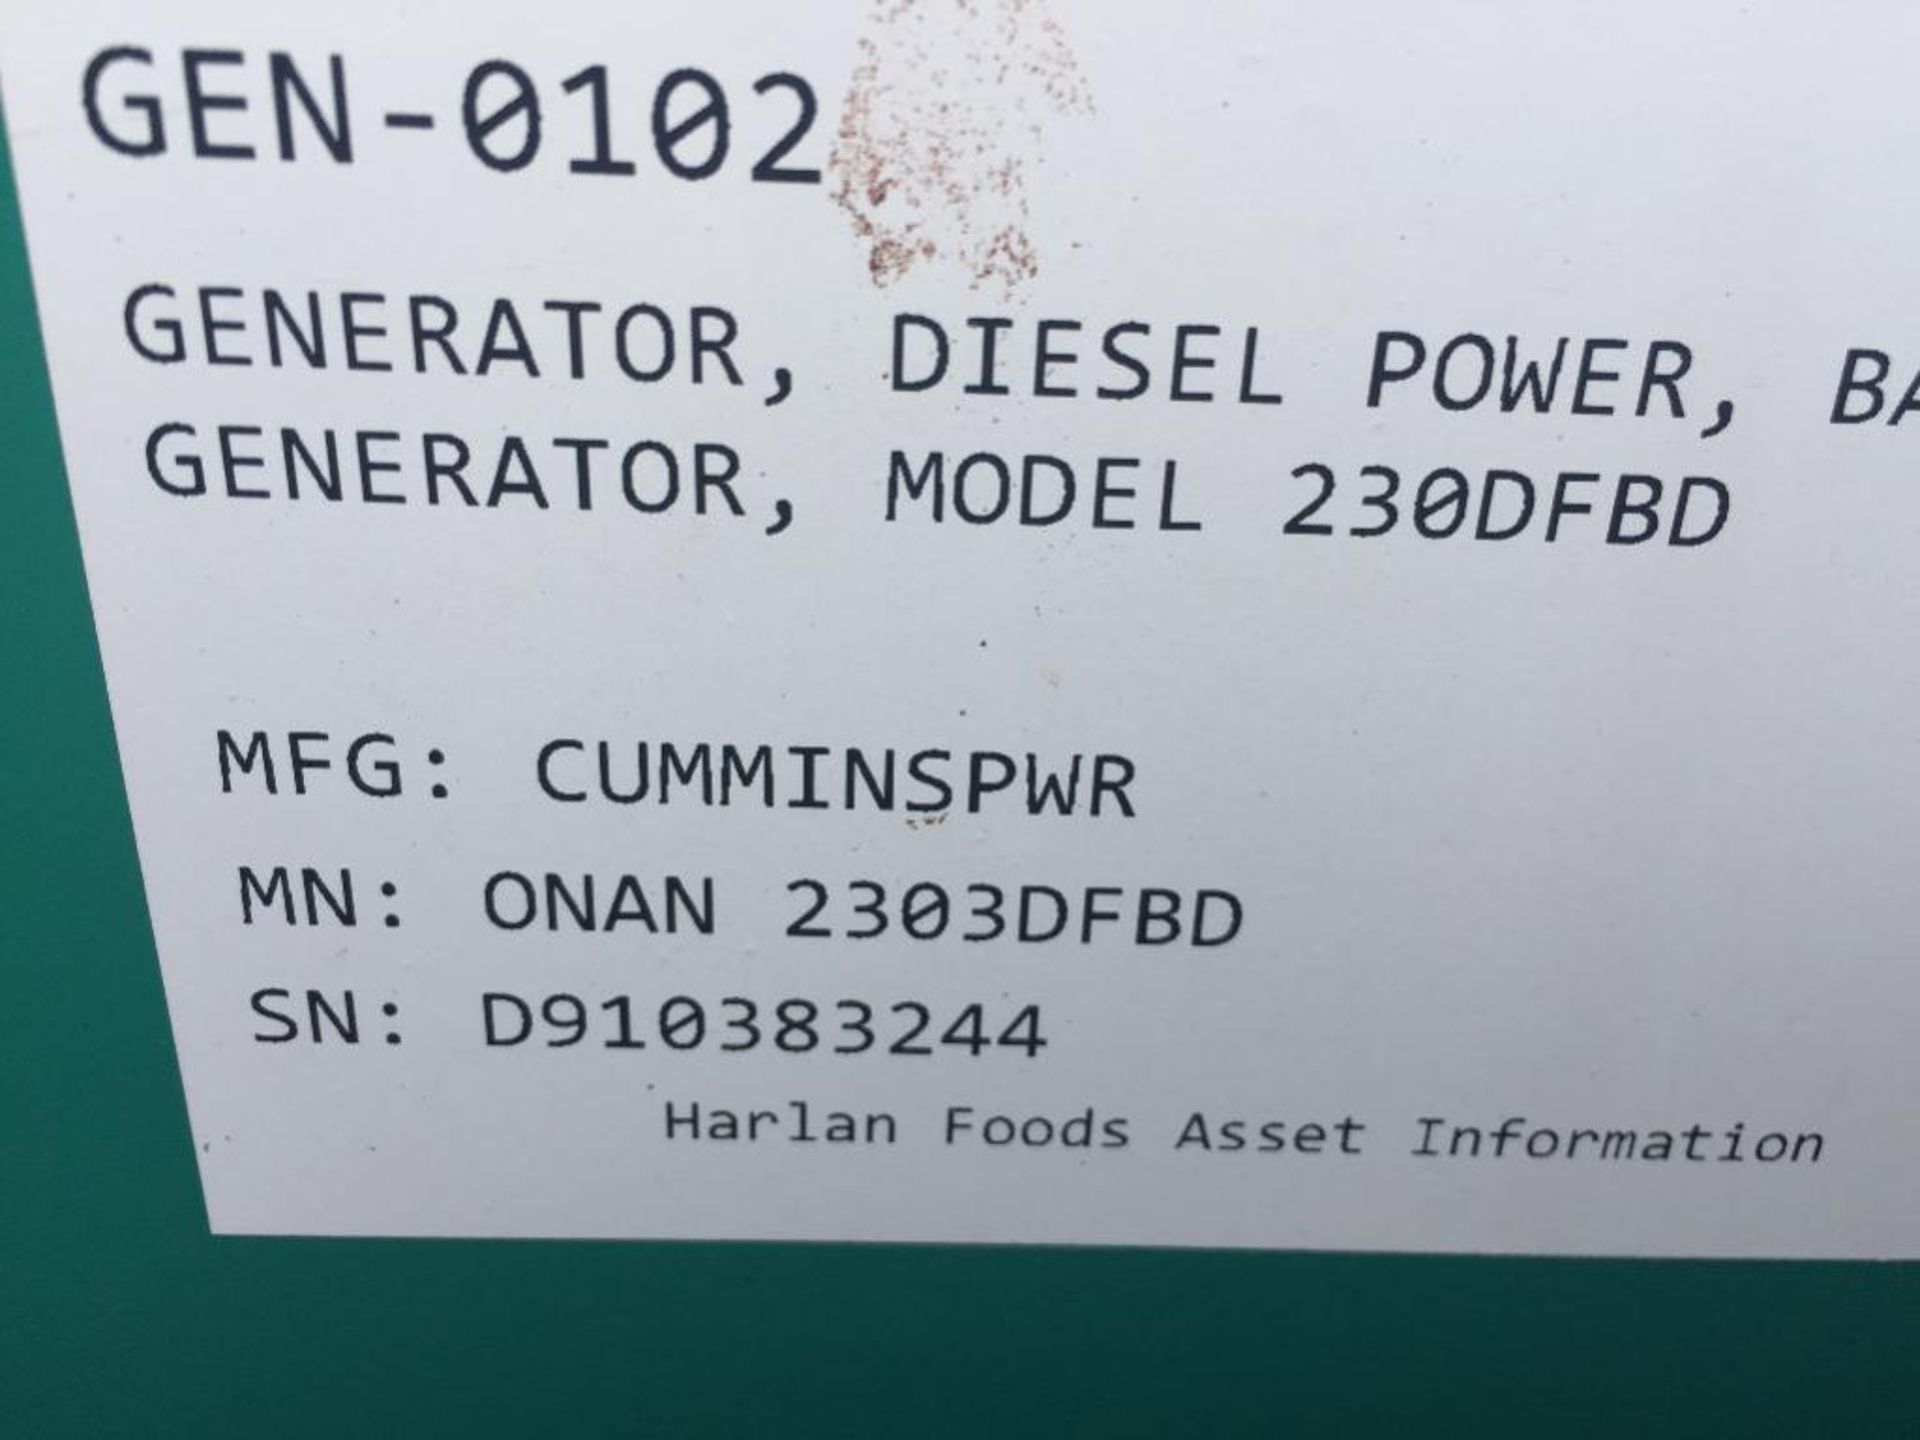 Cummins Onan diesel generator, Model 230DFBD, SN D910383244, SPEC 51299F, 223 hours, 1991 Cummins di - Image 13 of 18